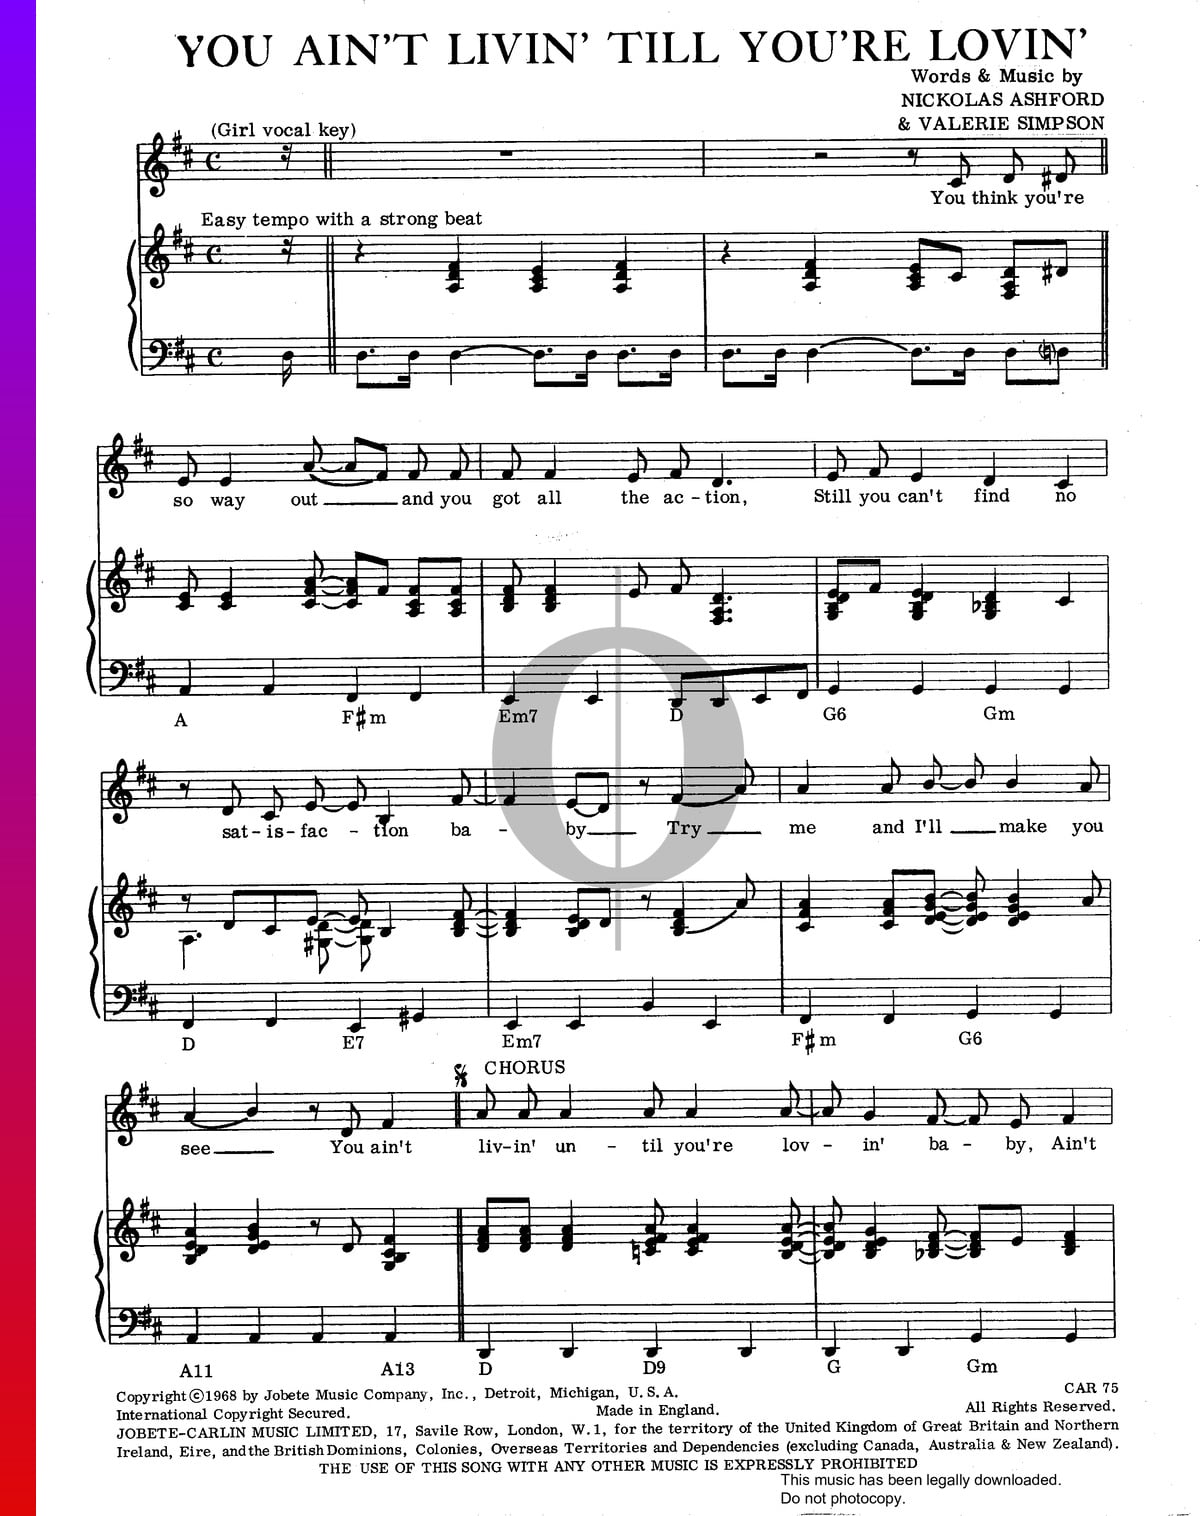 ▷ Les lacs du Connemara Sheet Music (Piano, Voice) - OKTAV